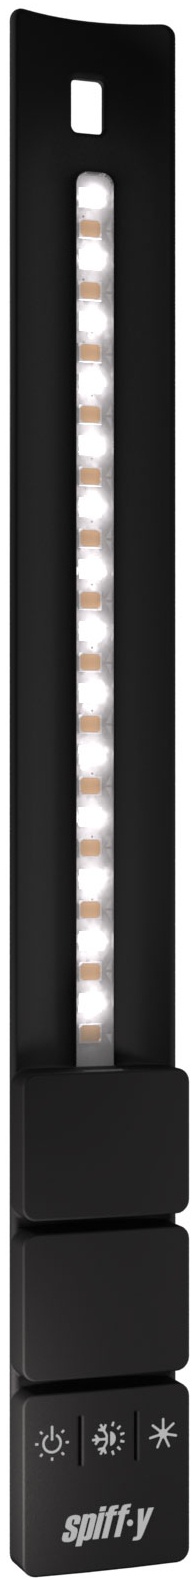 SPIFFYGEAR LUMEE Stick LED Bicolor